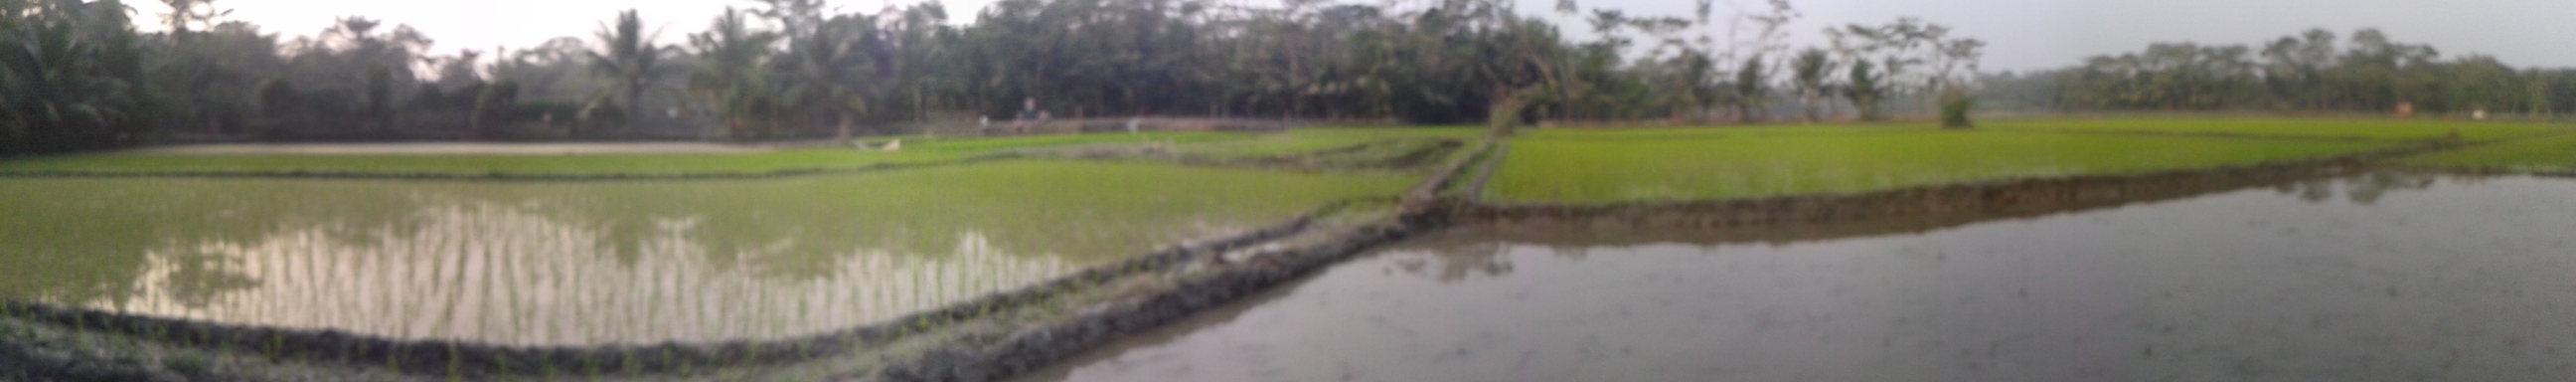 Flooded paddy field landscape 